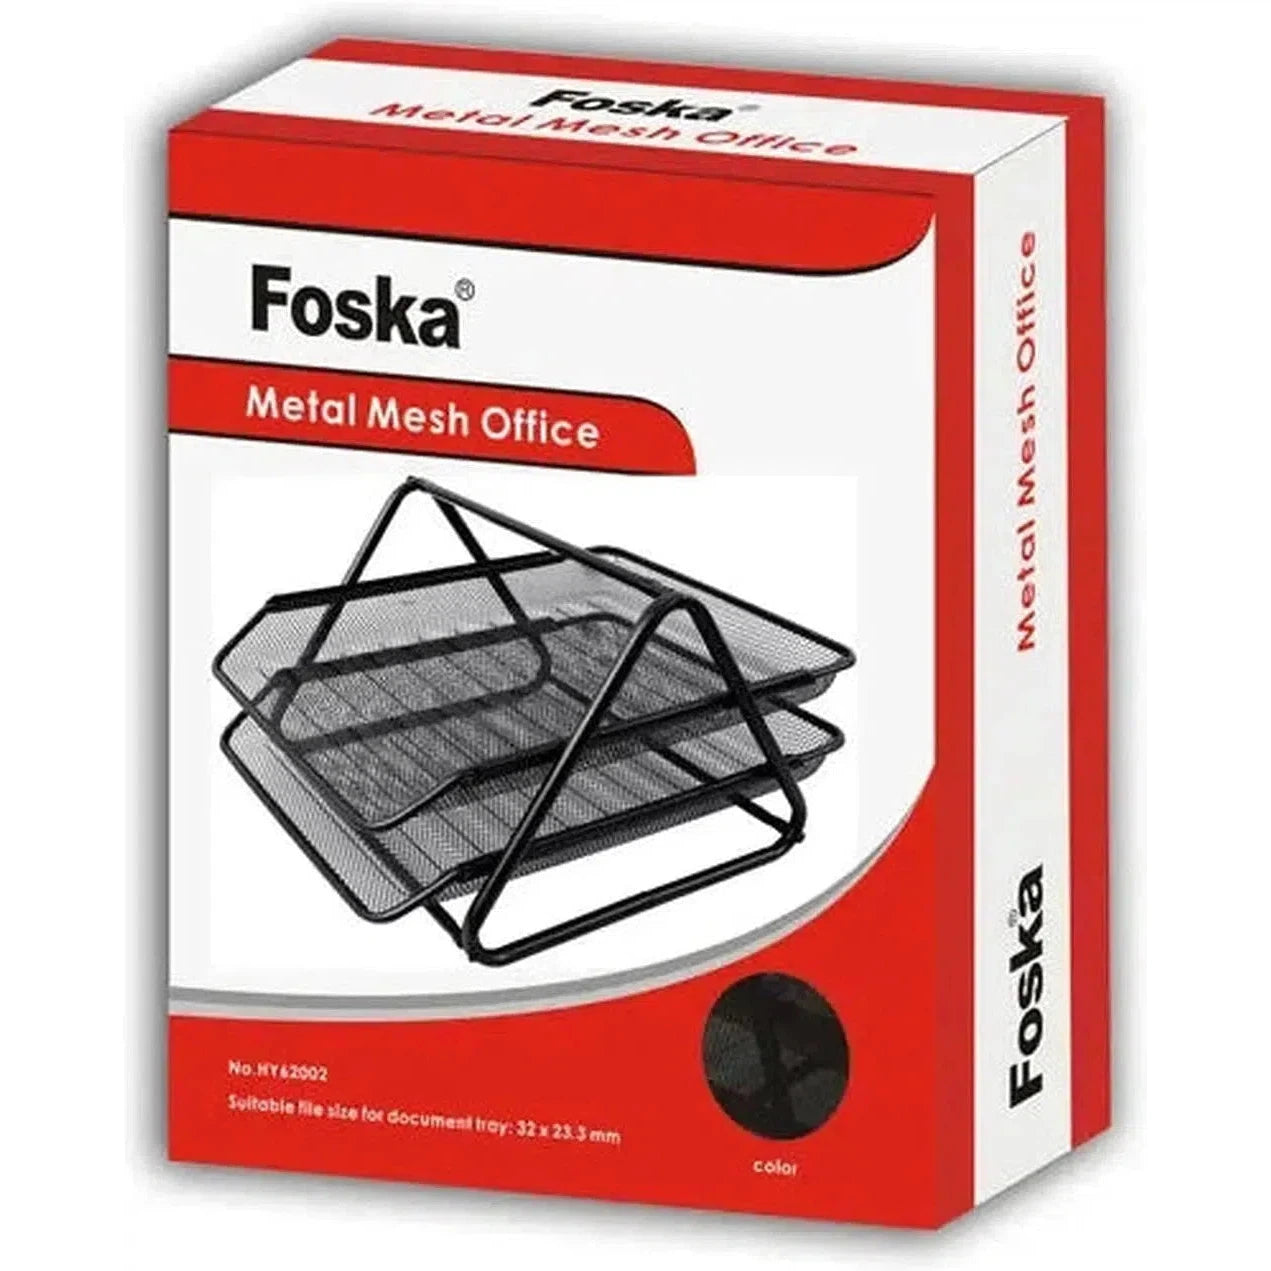 Foska-Layers Metal Mesh Office Organizer File Tray-Accessories And Organizers-Foska-Star Light Kuwait